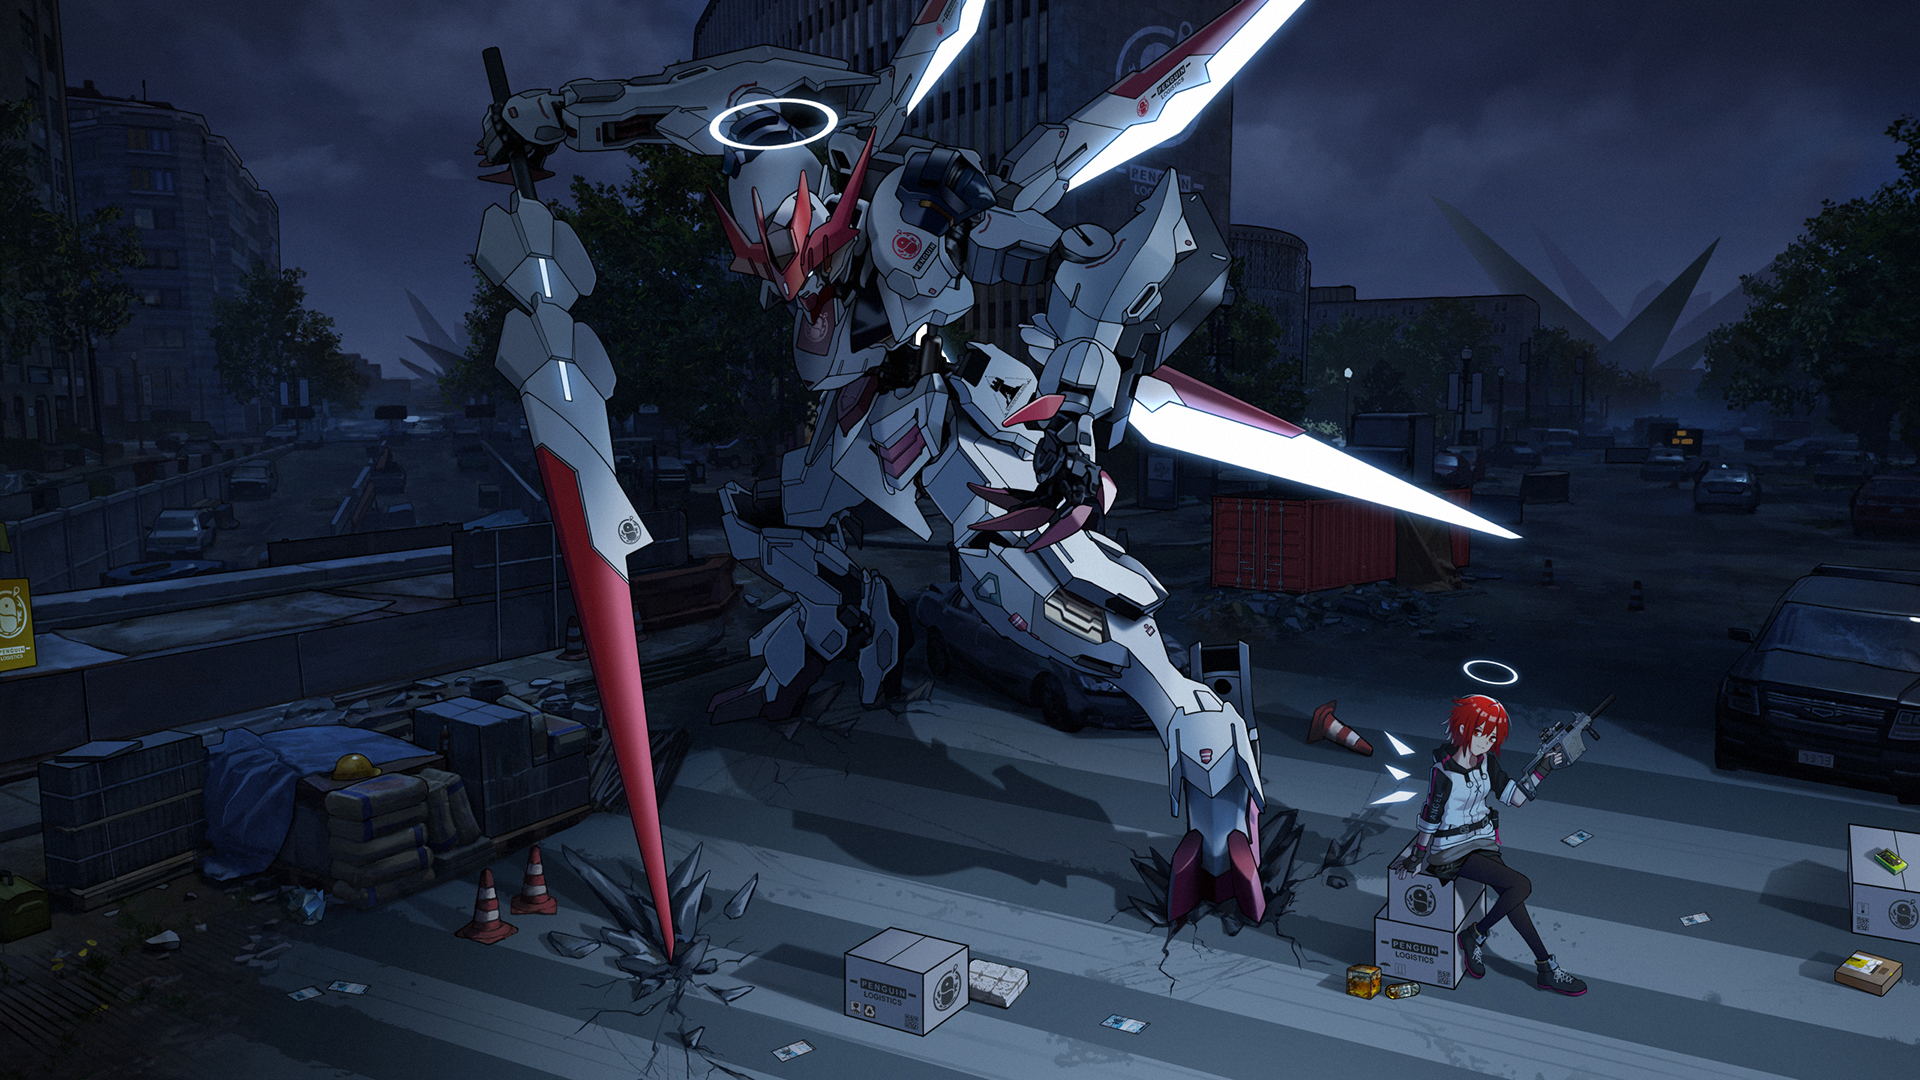 Anime 1920x1080 clouds mech building car SMG wings redhead Halo spear Barbatos Gundam Arknights anime